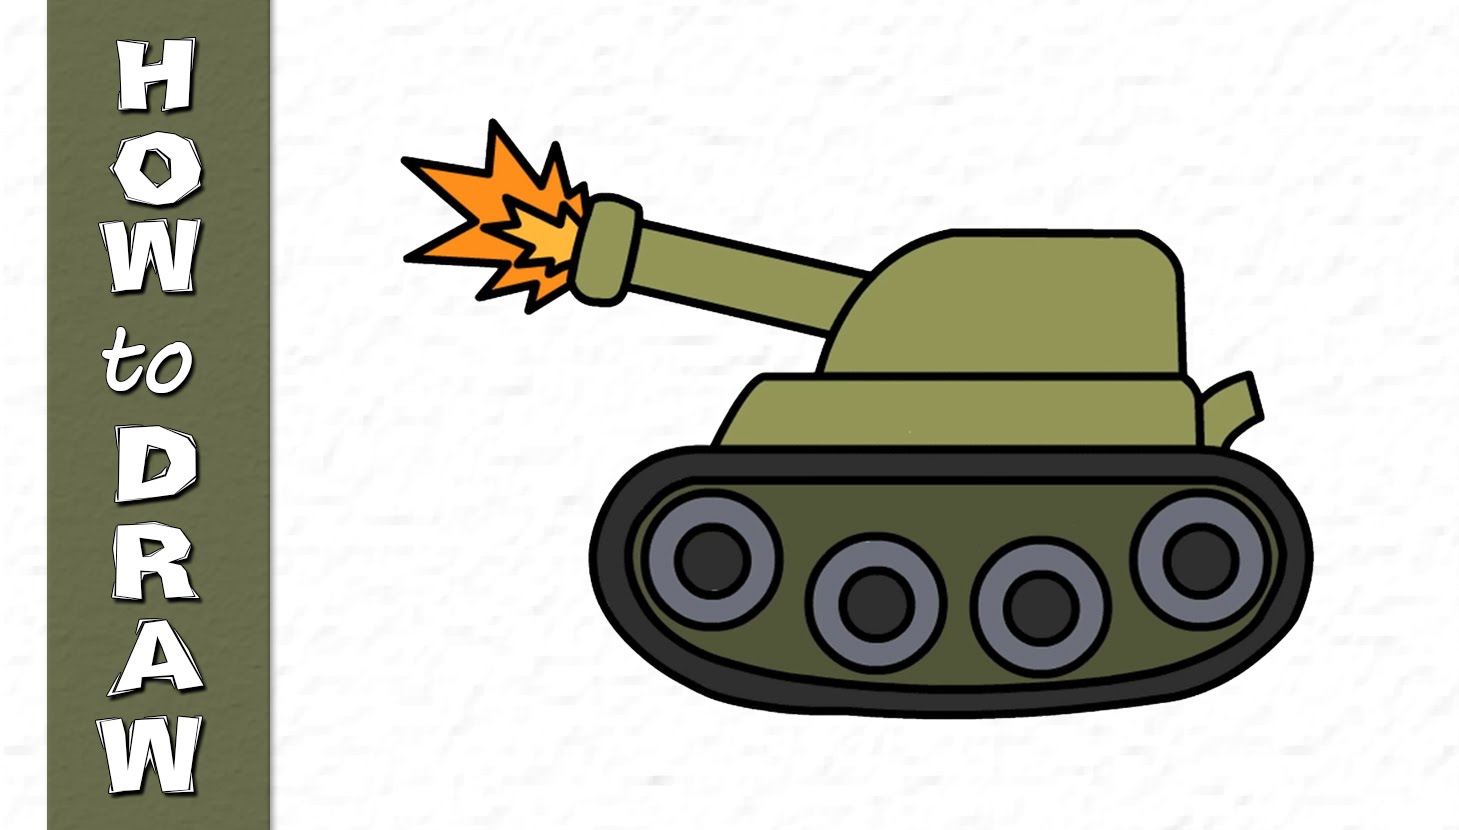 military tanks drawing